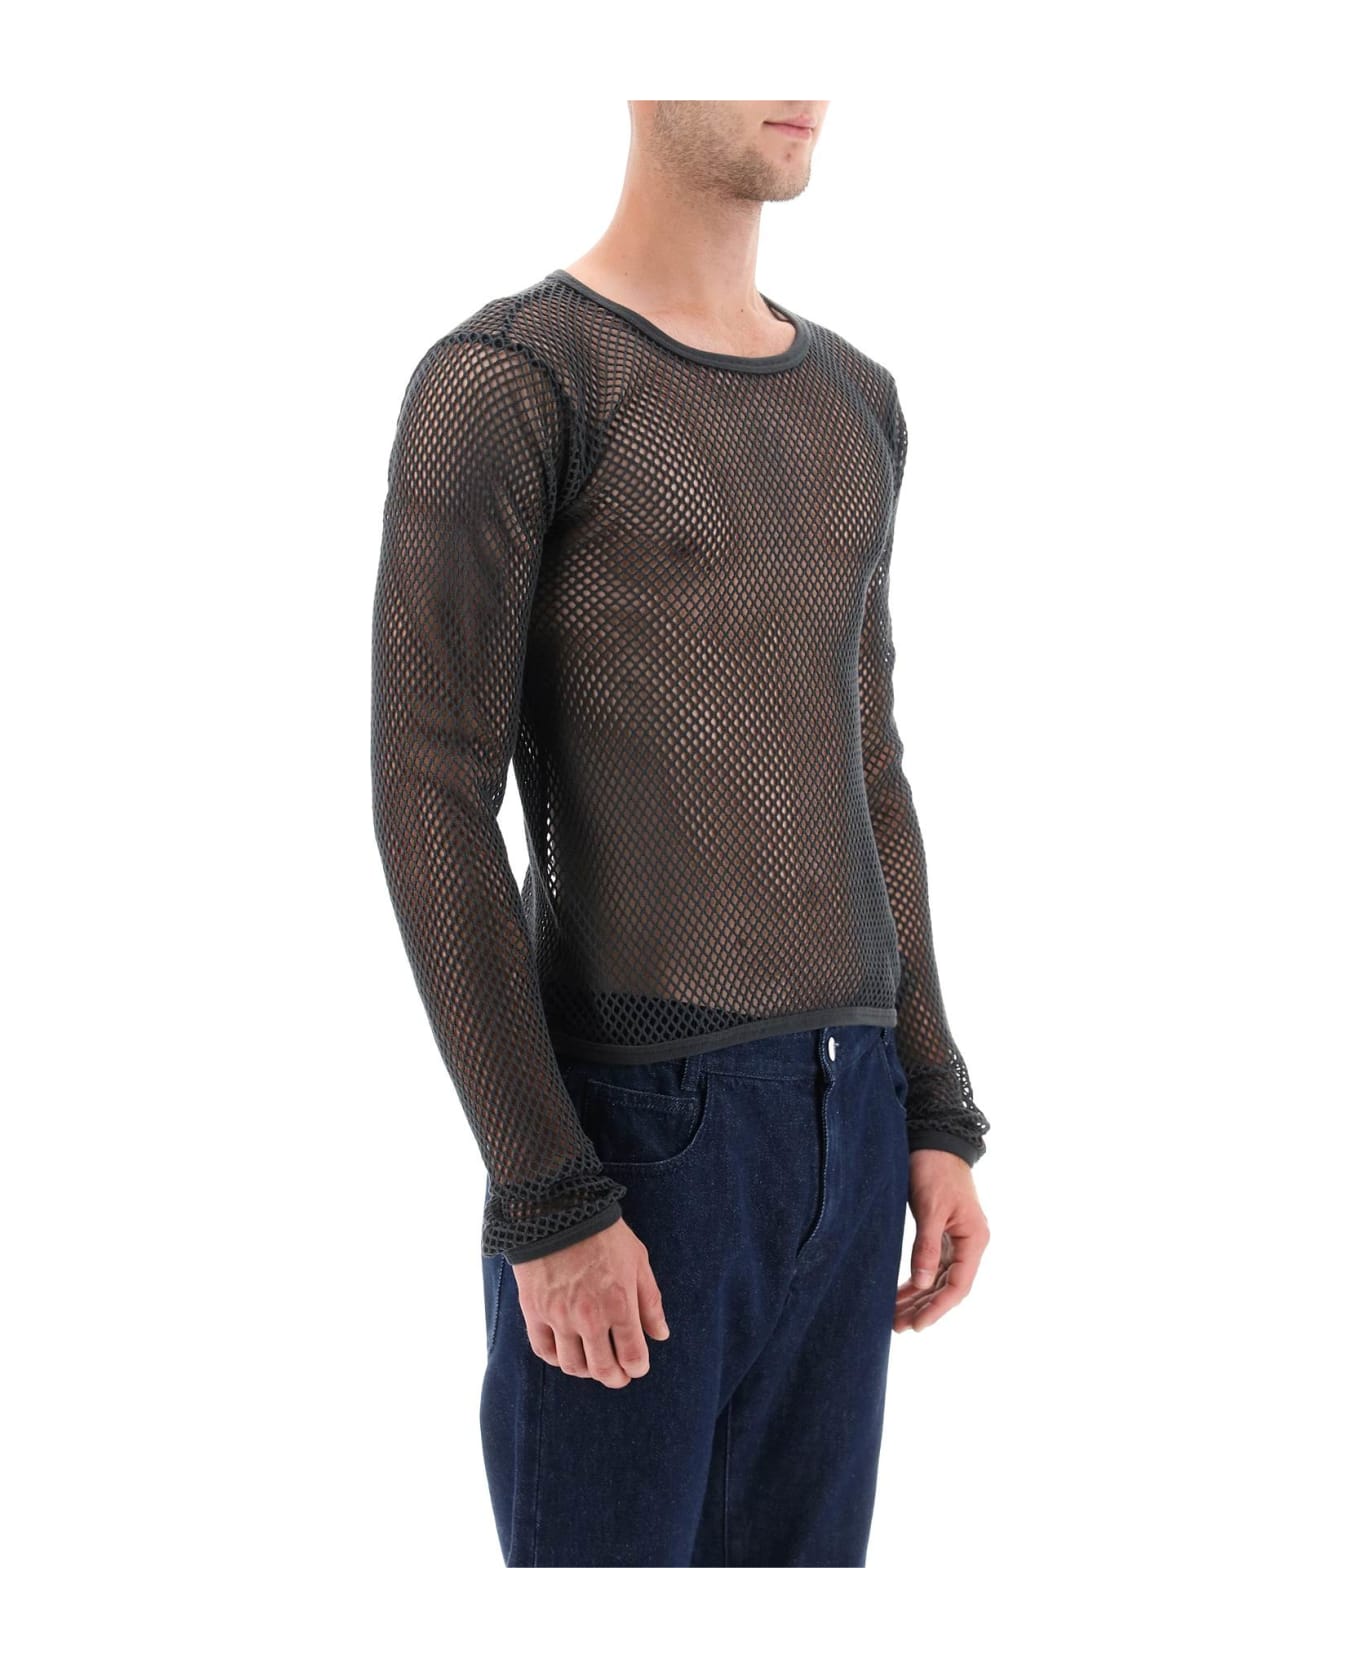 Raf Simons Long Sleeve Fishnet Knit T-shirt - DARK GREY (Grey)